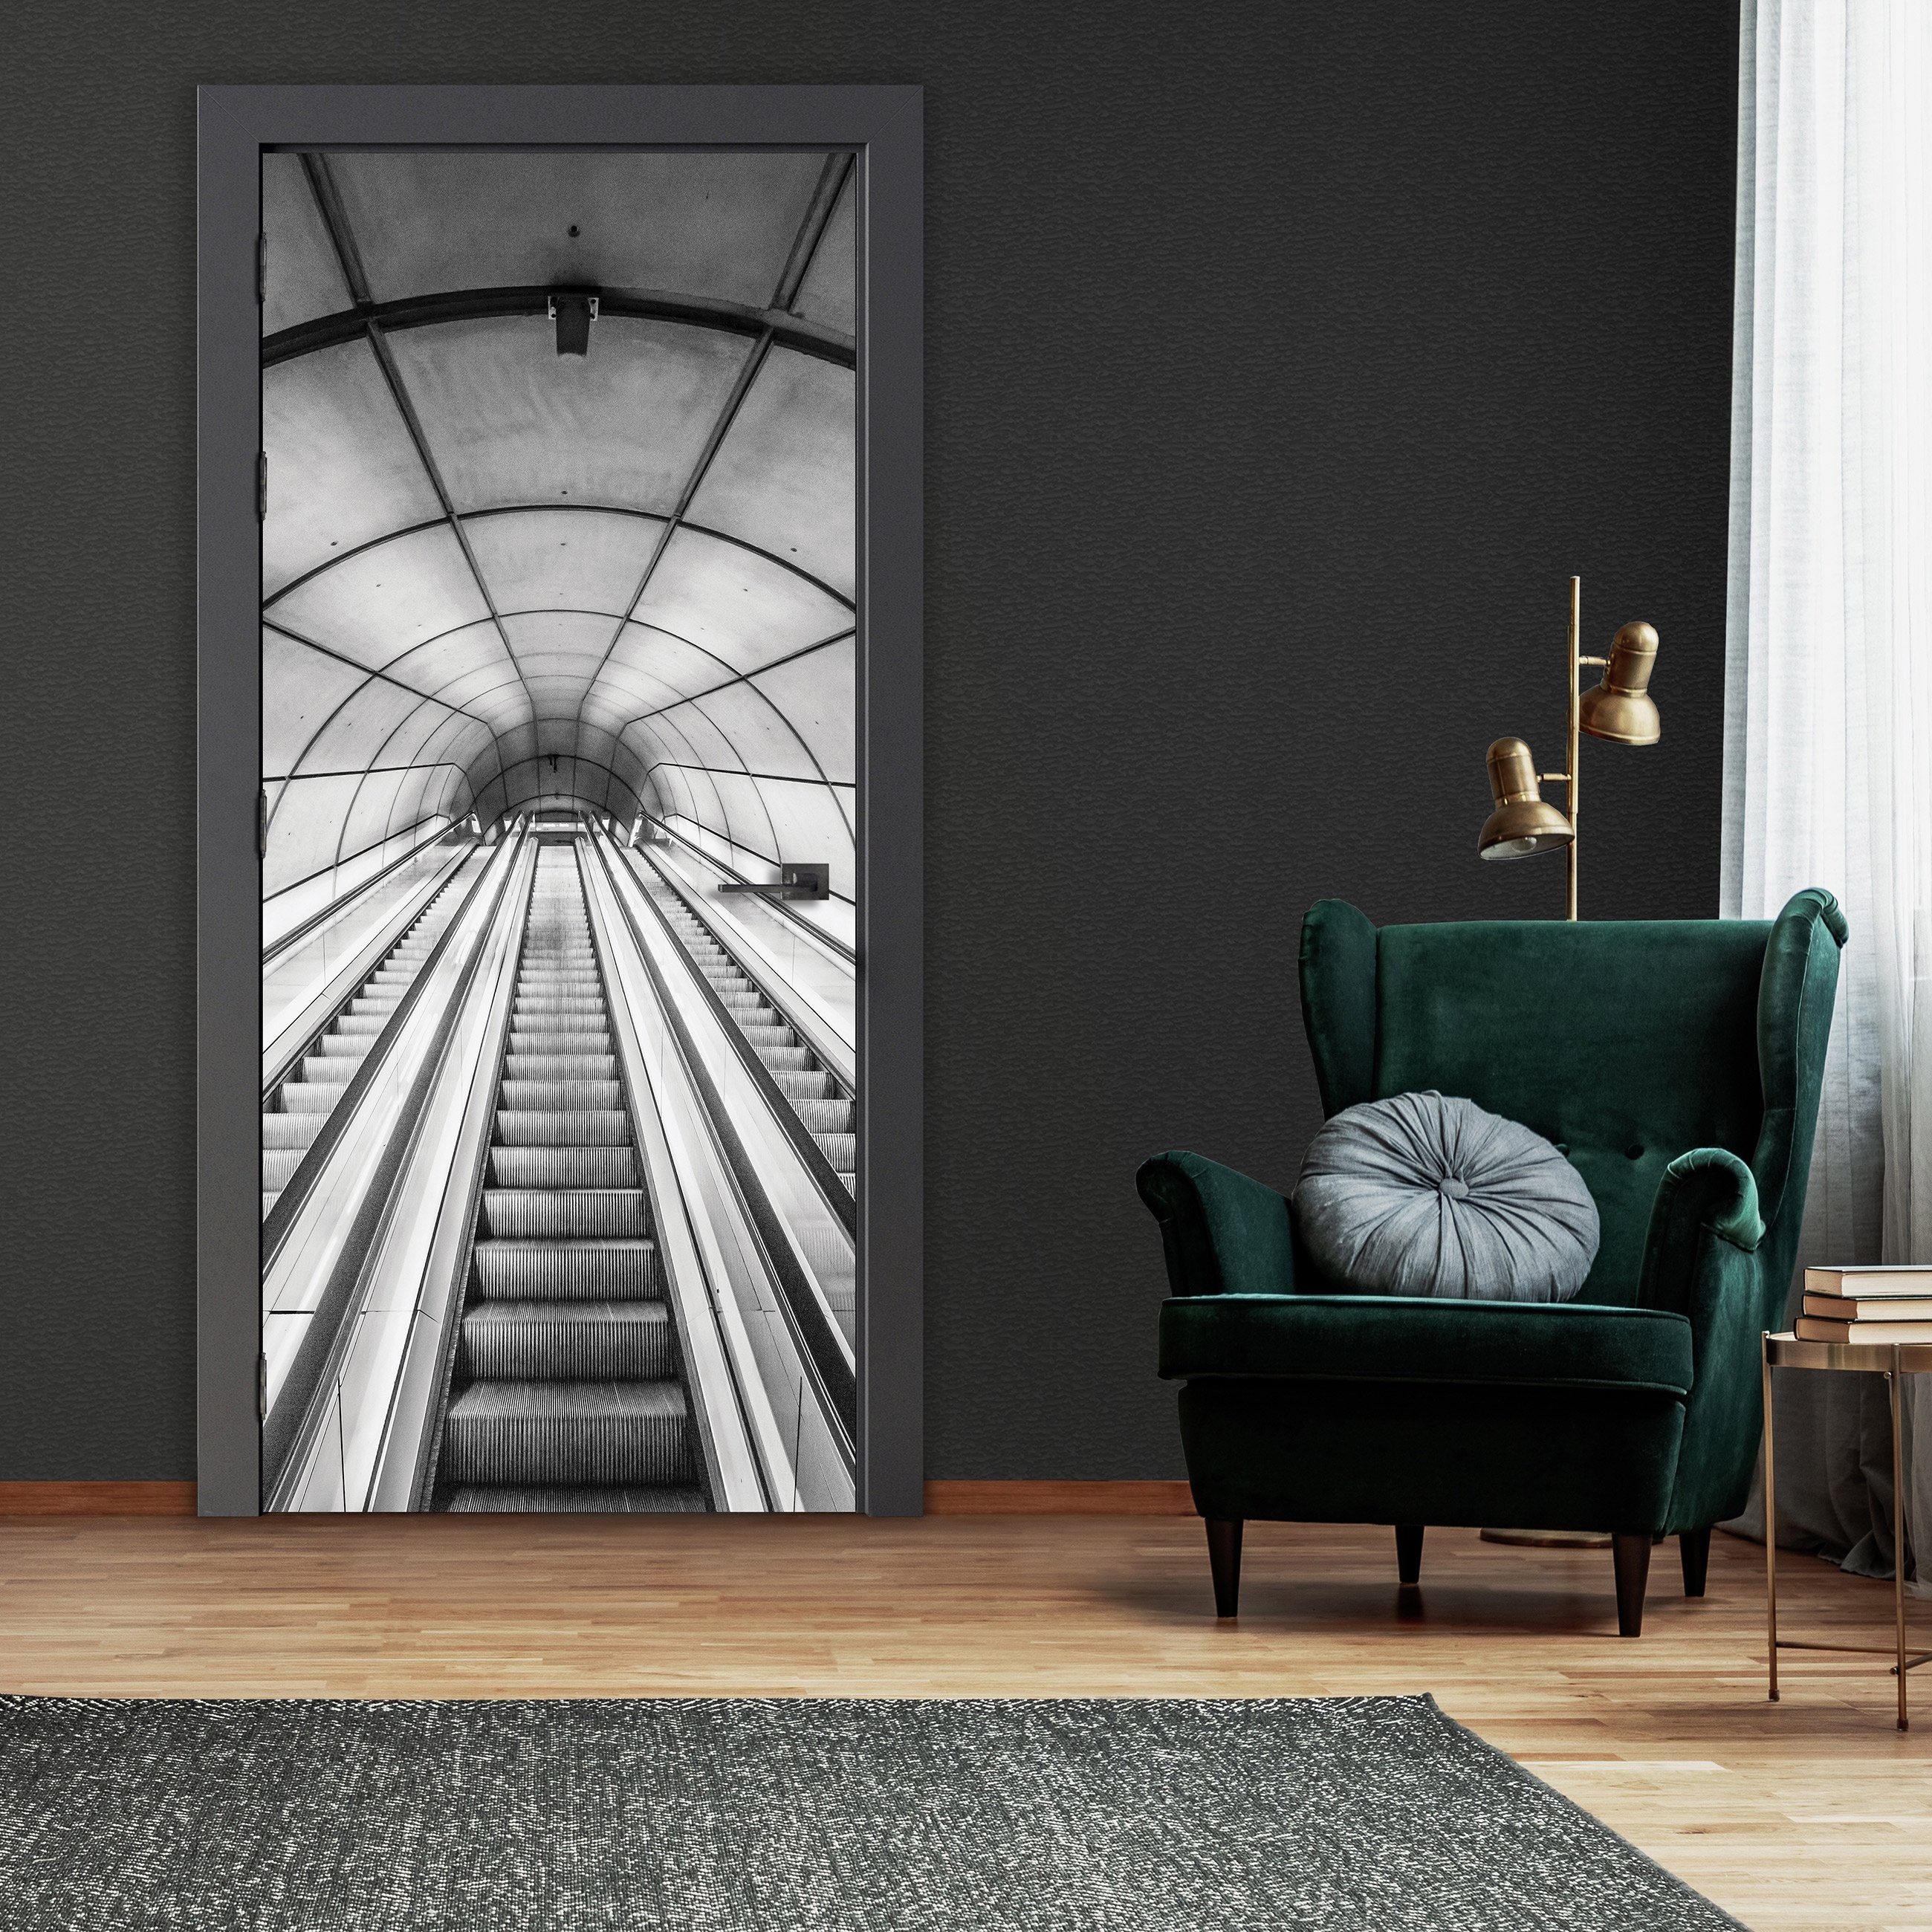 Wallarena Türtapete »Selbstklebend Treppe 3D Effekt Türposter Türfolie  Türaufkleber Fototapete für Tür, 91x211 cm«, Glatt, 3D-Optik, Treppe,  Türtapete Selbstklebend online kaufen | OTTO